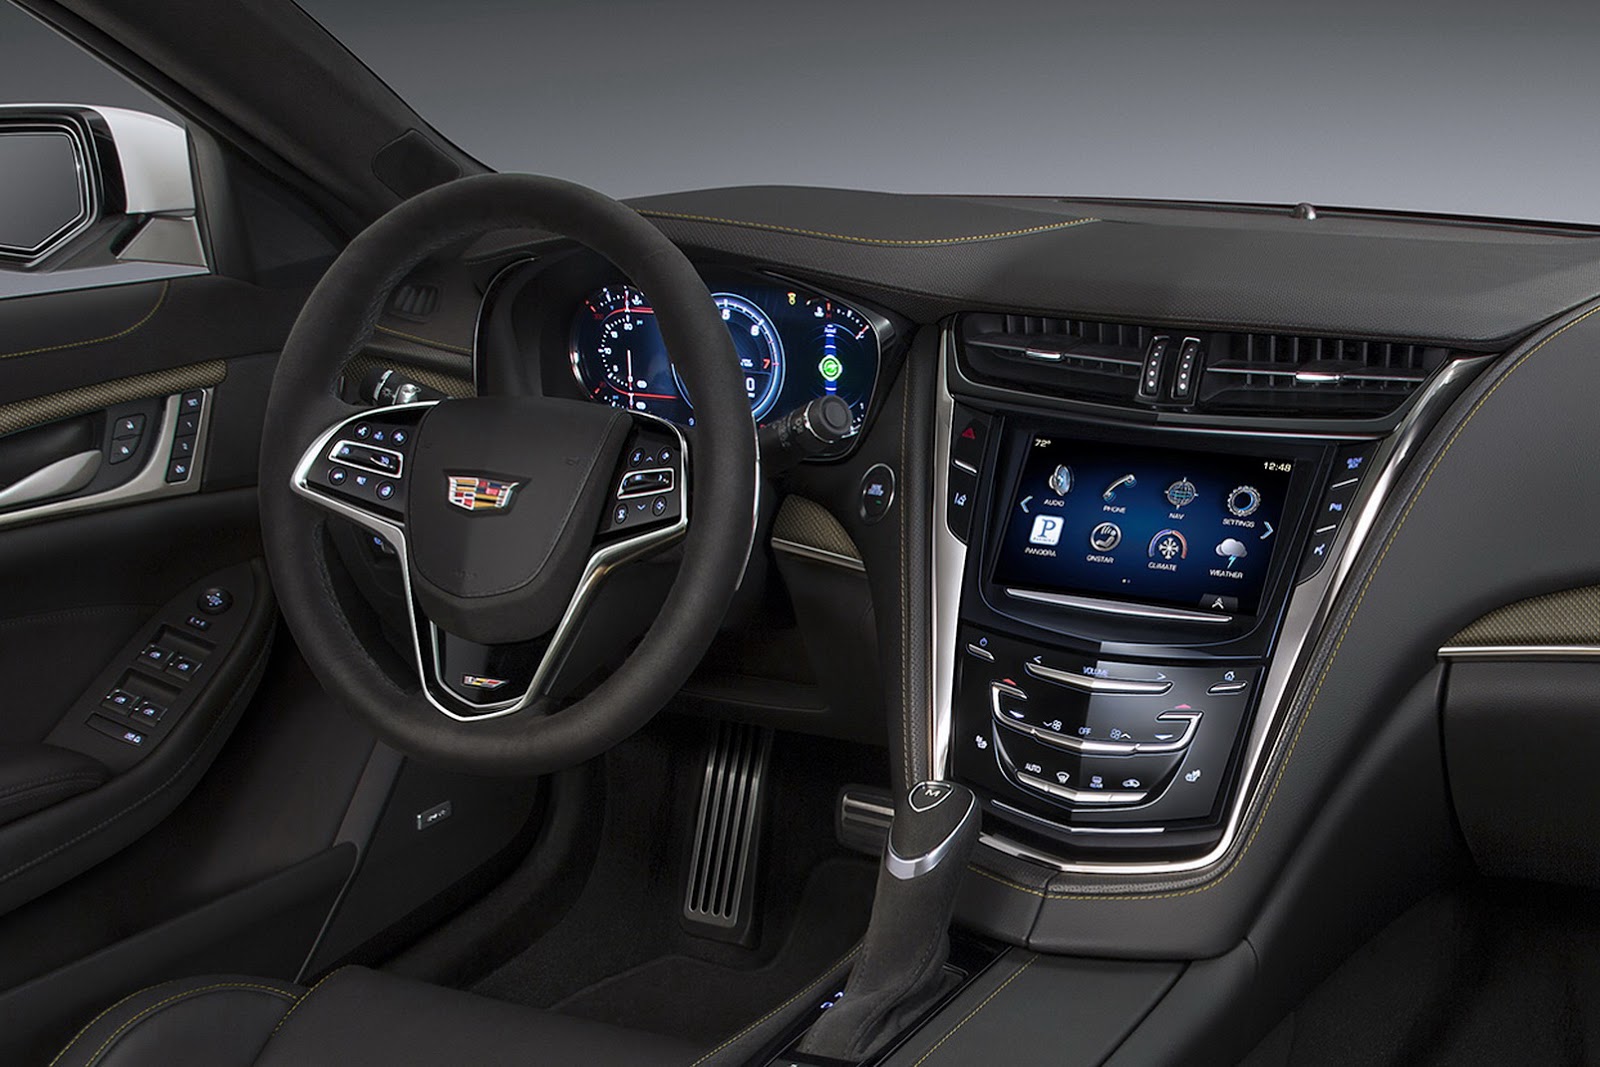 New 2016 Cadillac Cts V Has 640hp Supercharged V8 Reaches